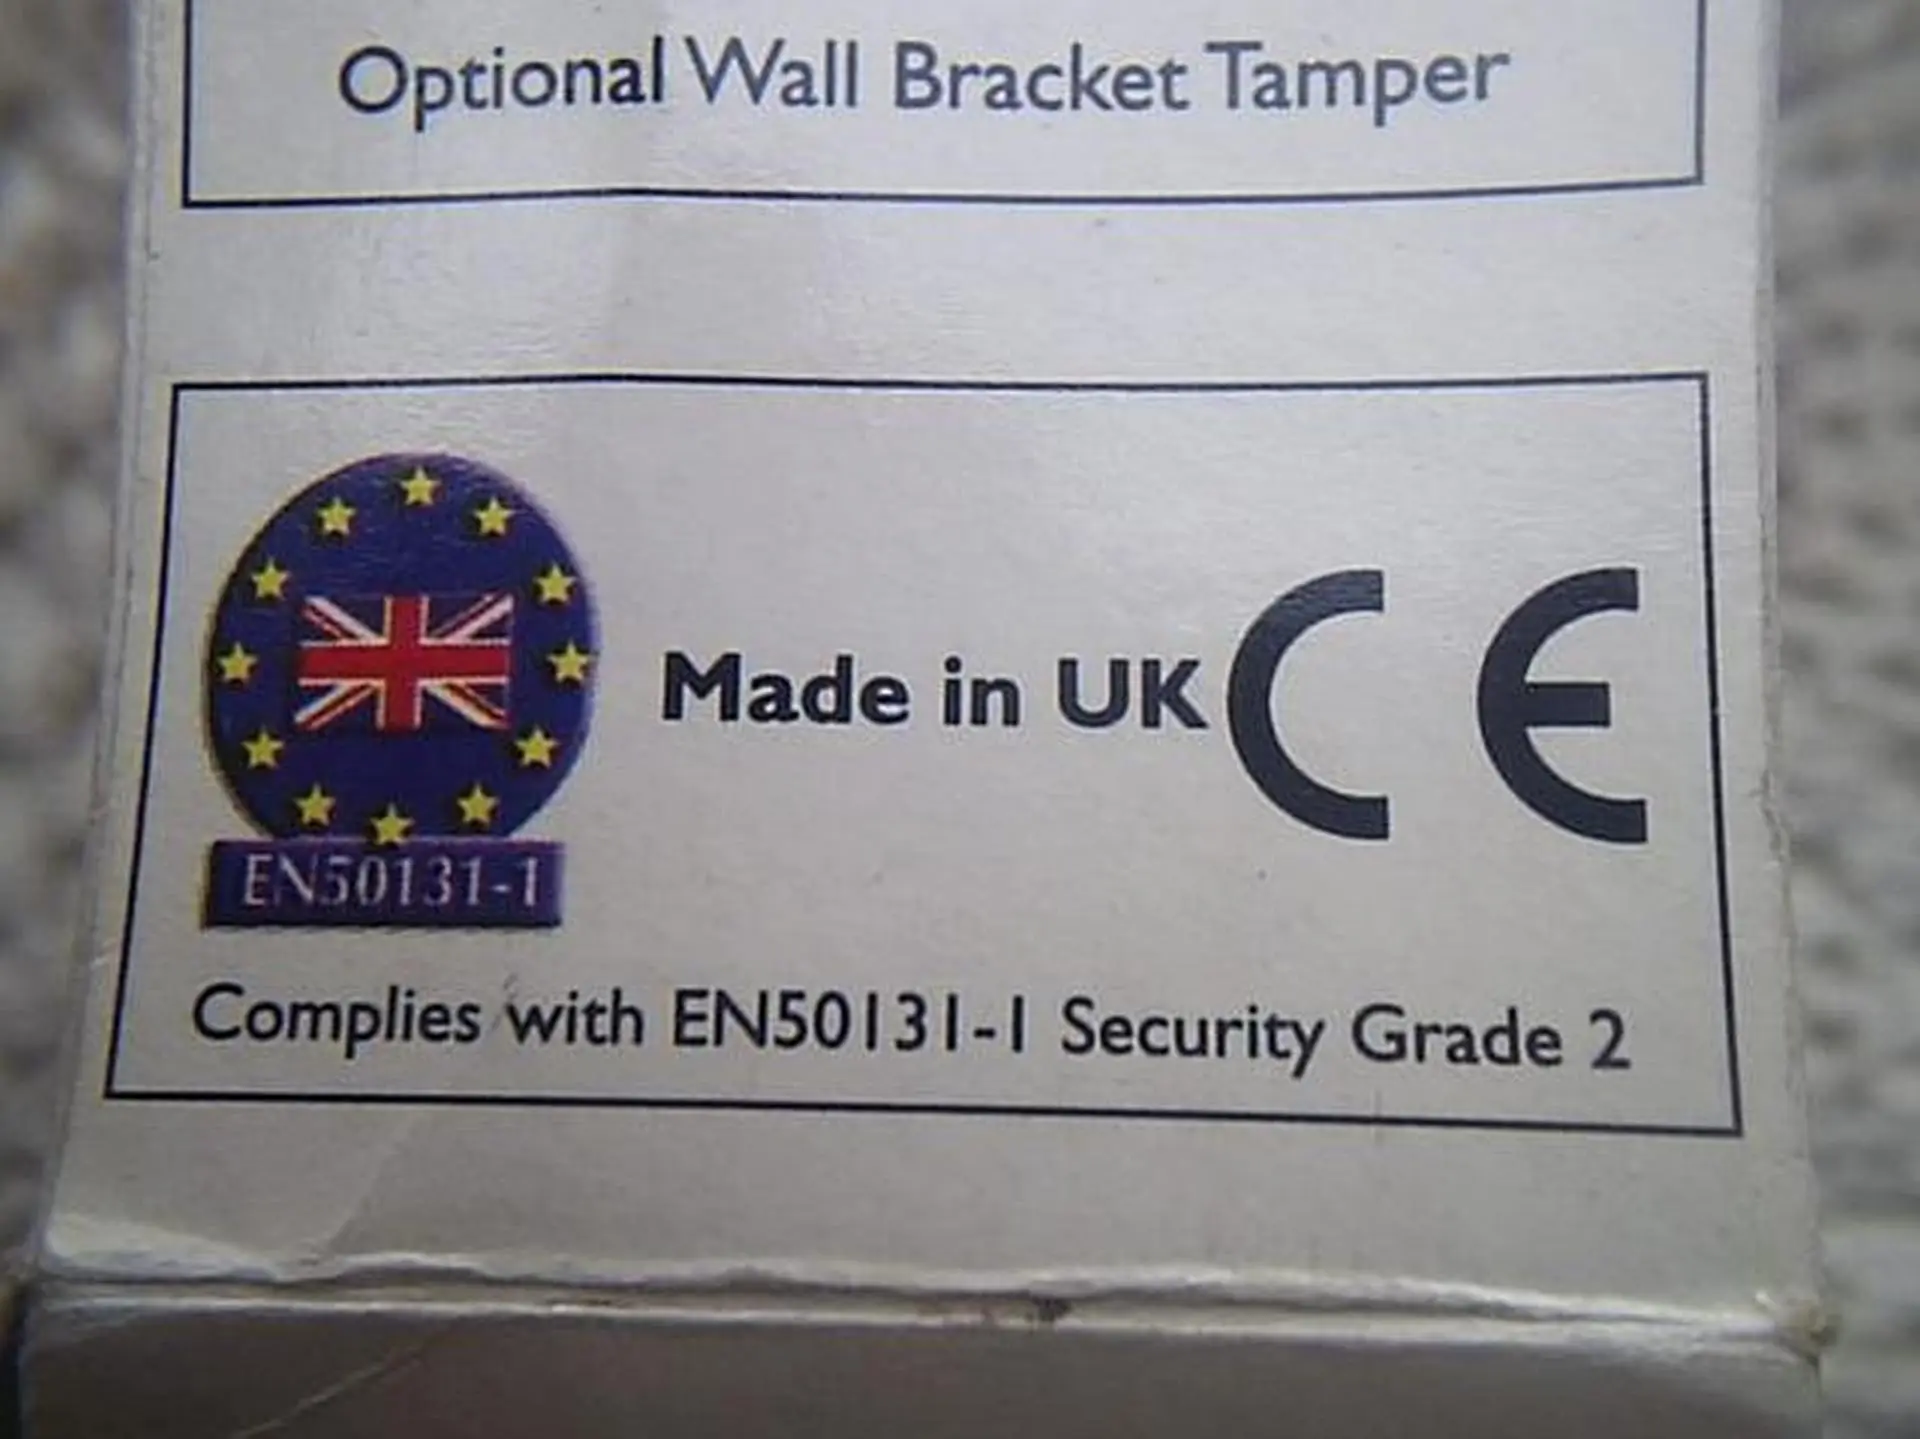   : Made in UK.